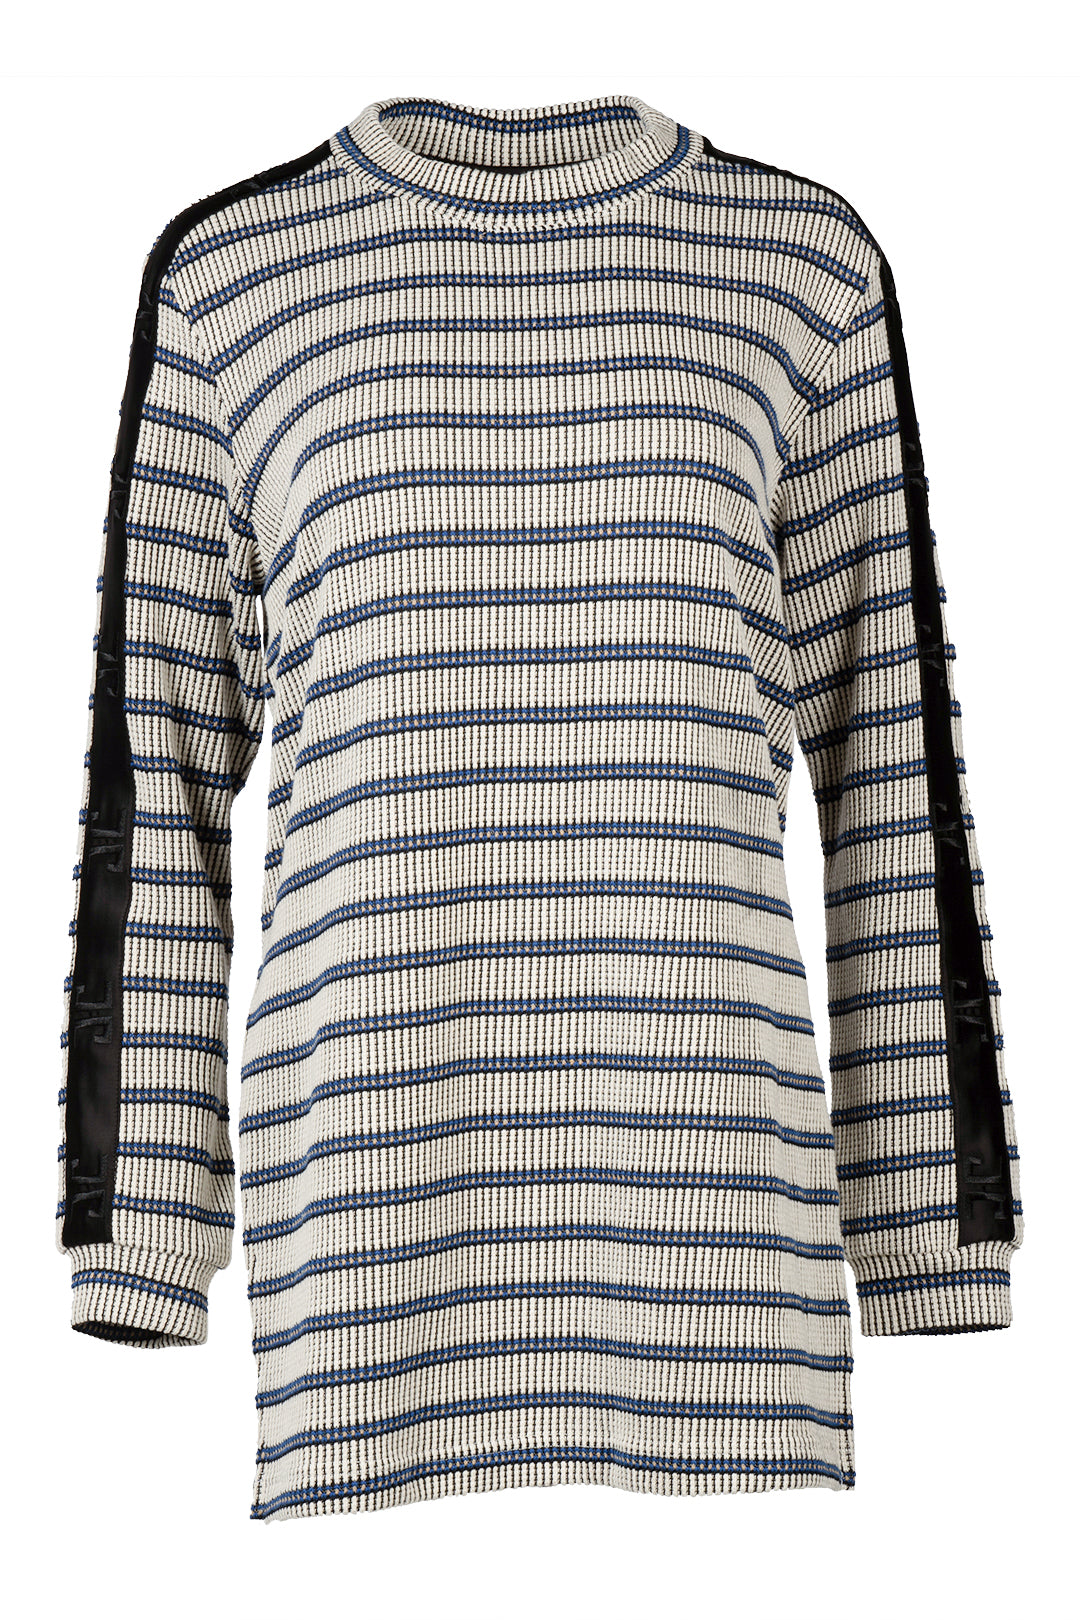 Ivory blue striped knit sweater | Rosie